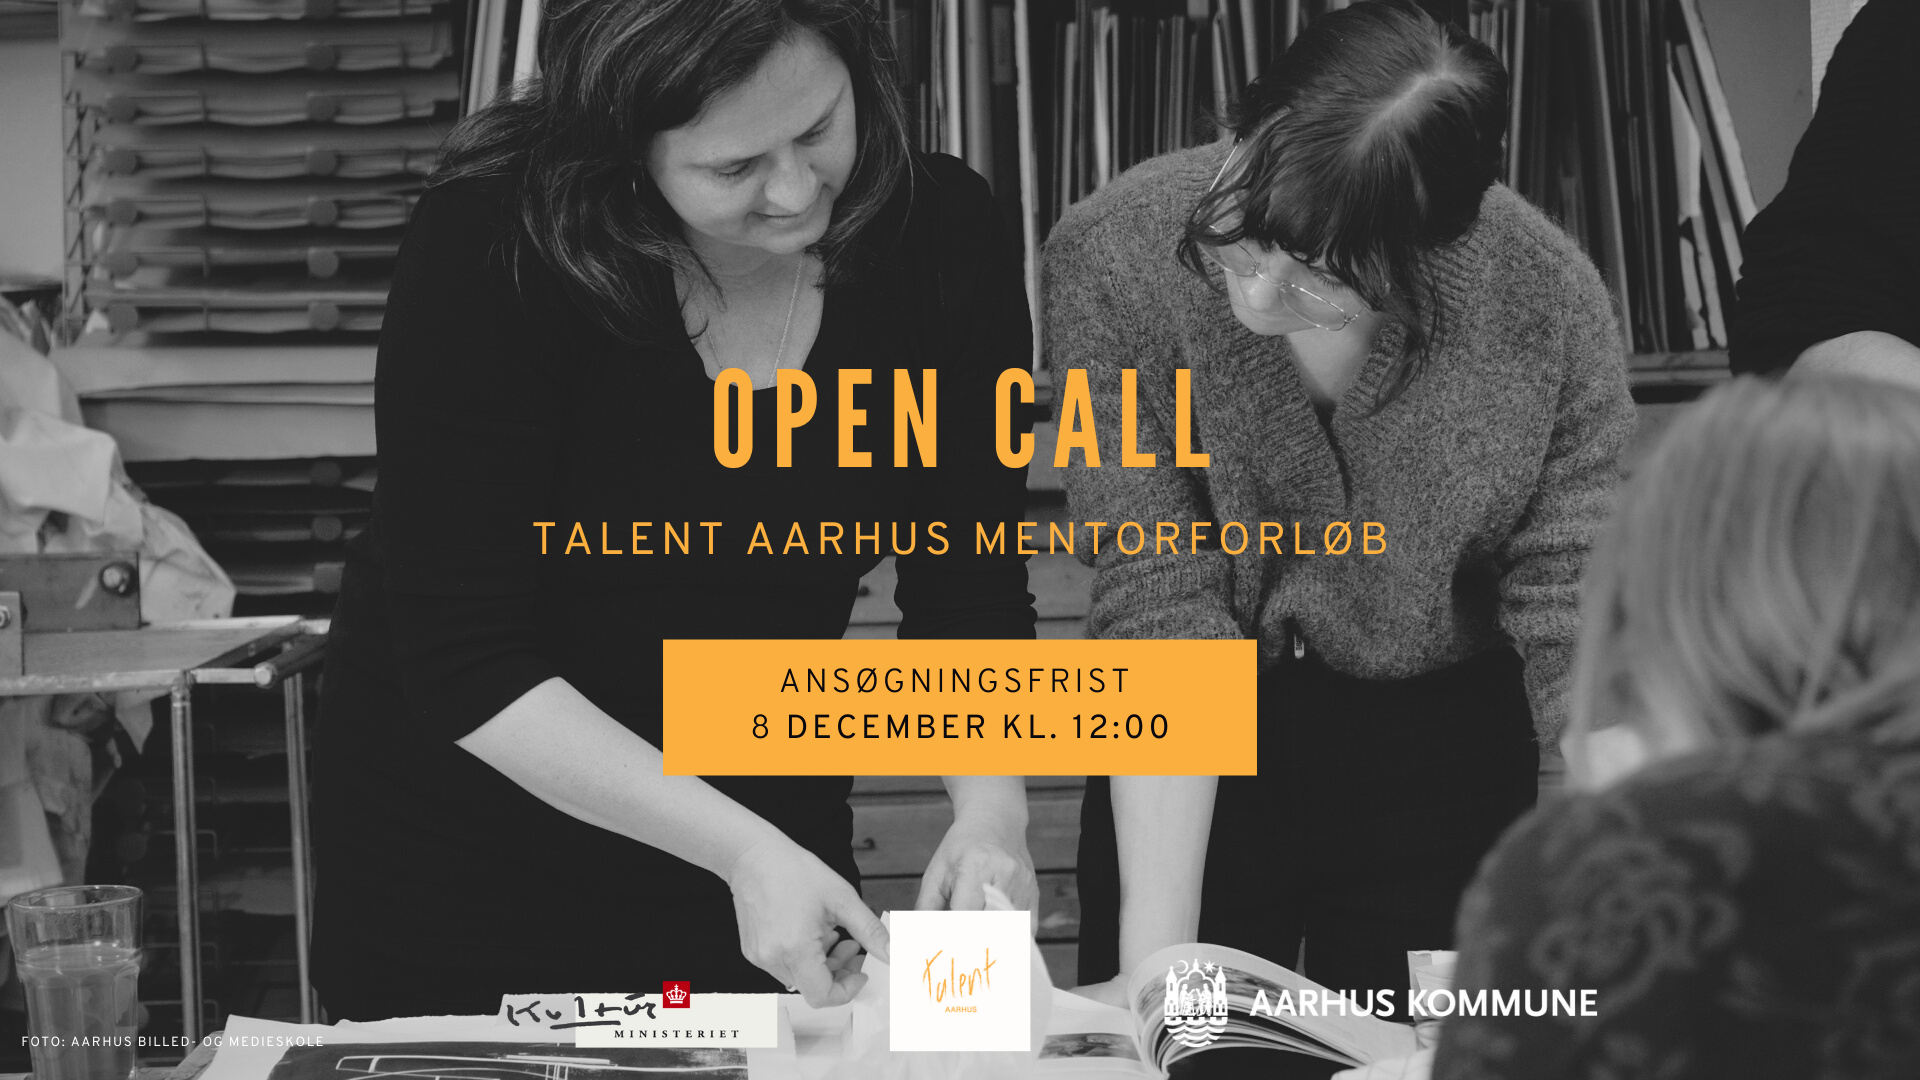 — Talent Aarhus